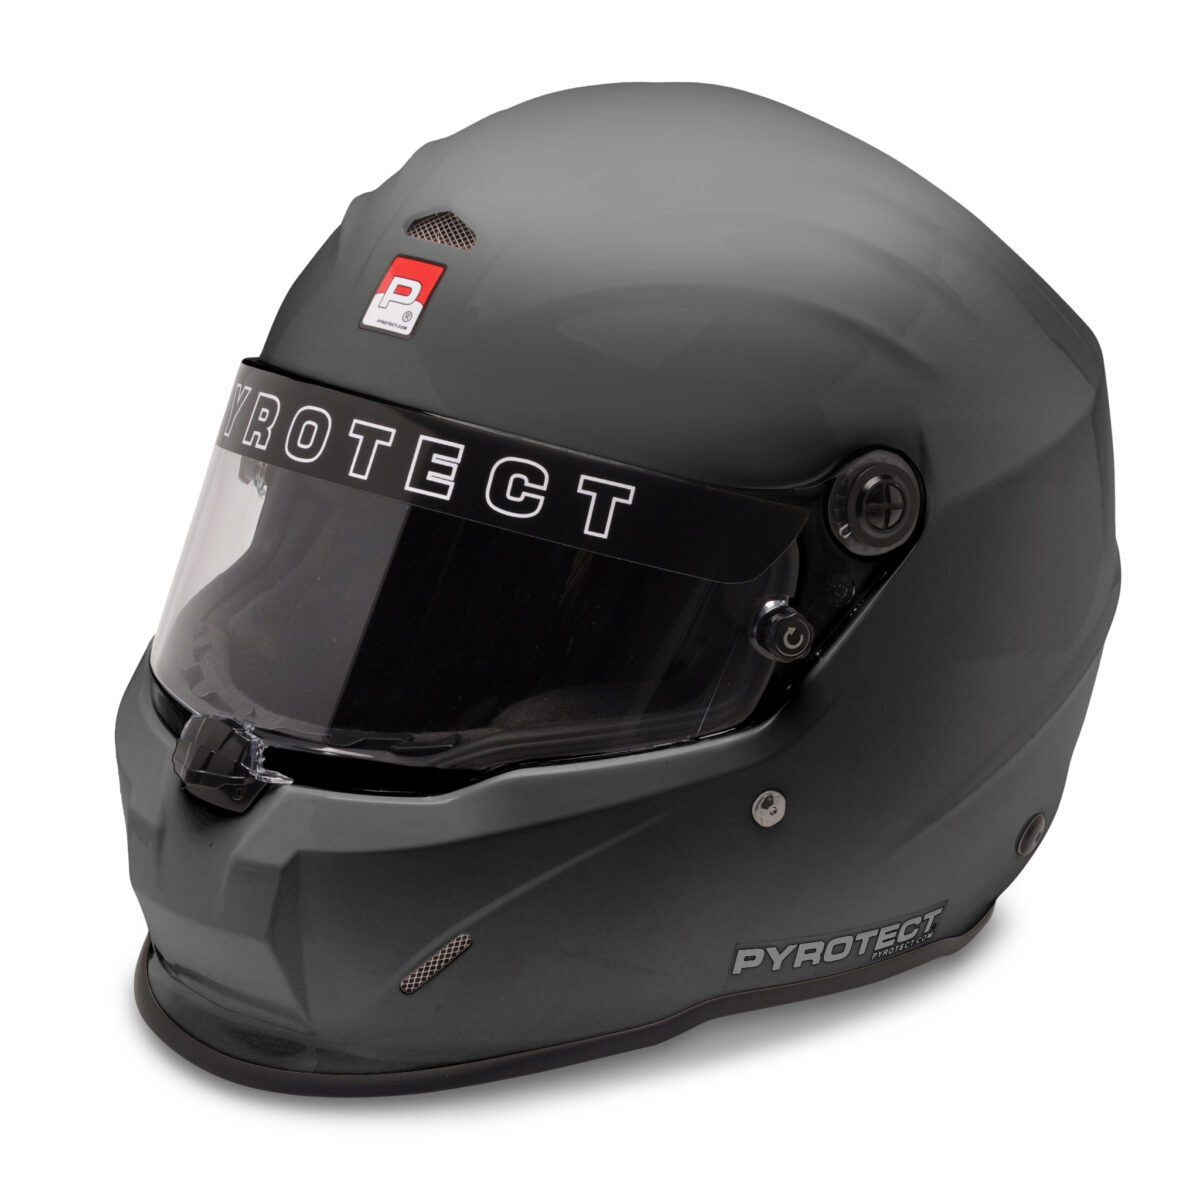 Helmet Pro 3X-Lrg Flat Black Duckbill SA2020